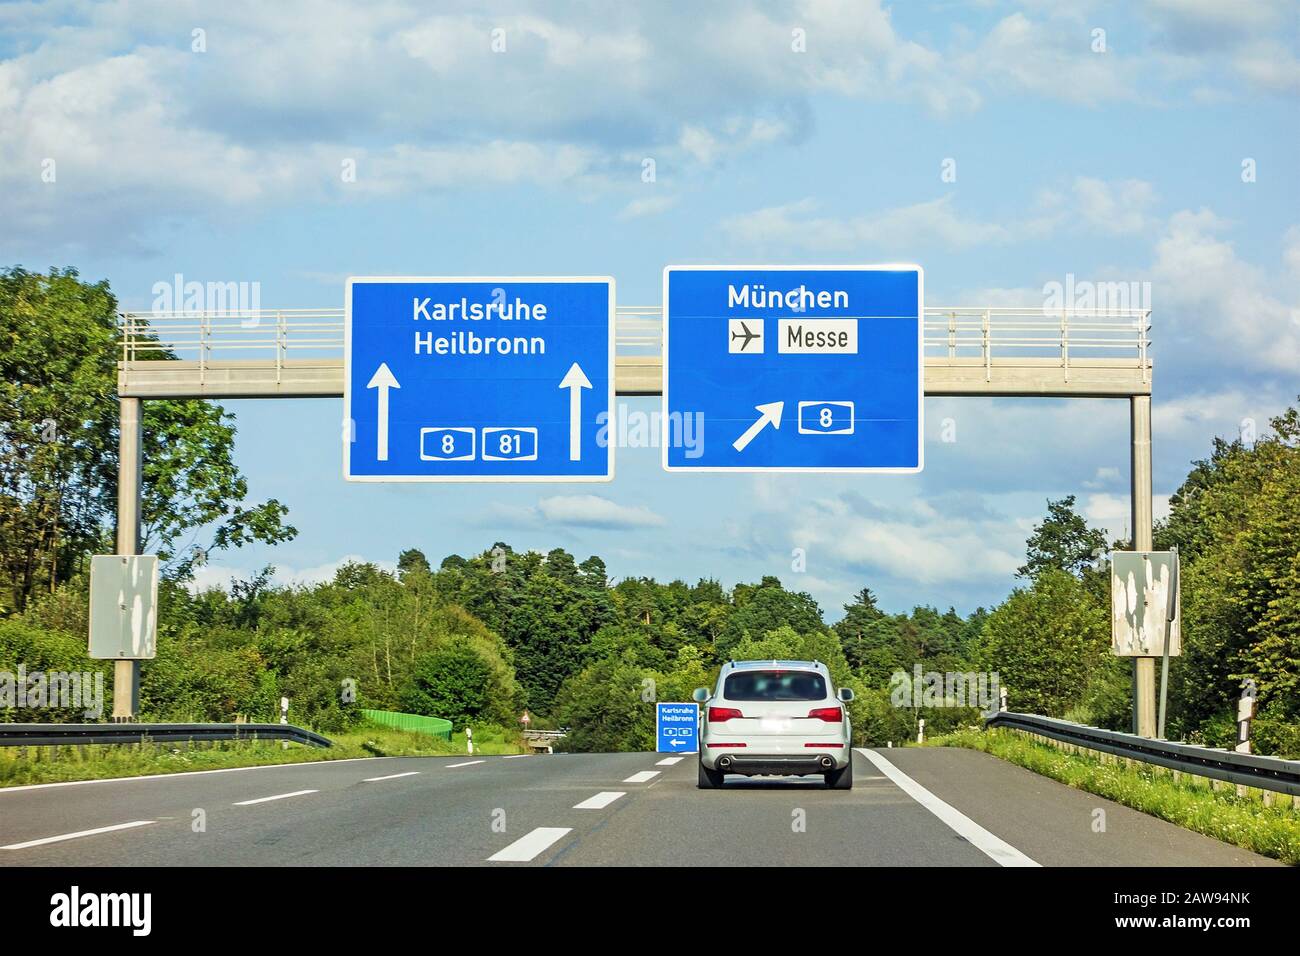 Segnale autostradale (Autobahn A 81 / A 8) indicazioni Karlsruhe / Heilbronn - uscita A 8 per Monaco / Aeroporto / Messe Foto Stock